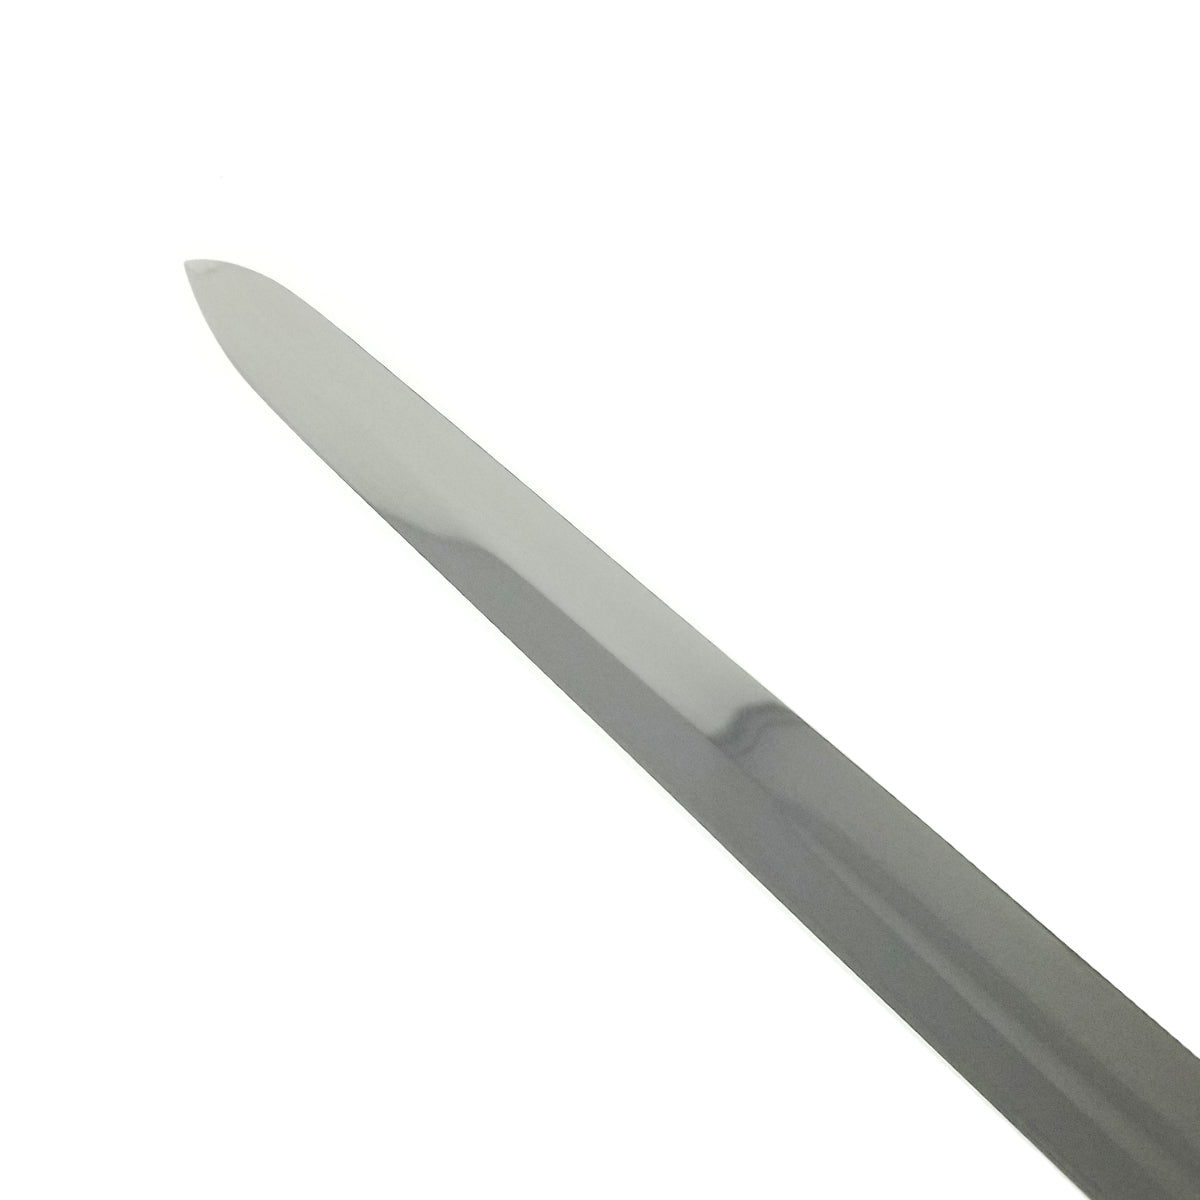 45"  Hand Made Sharp 1060 Steel Medieval Sword